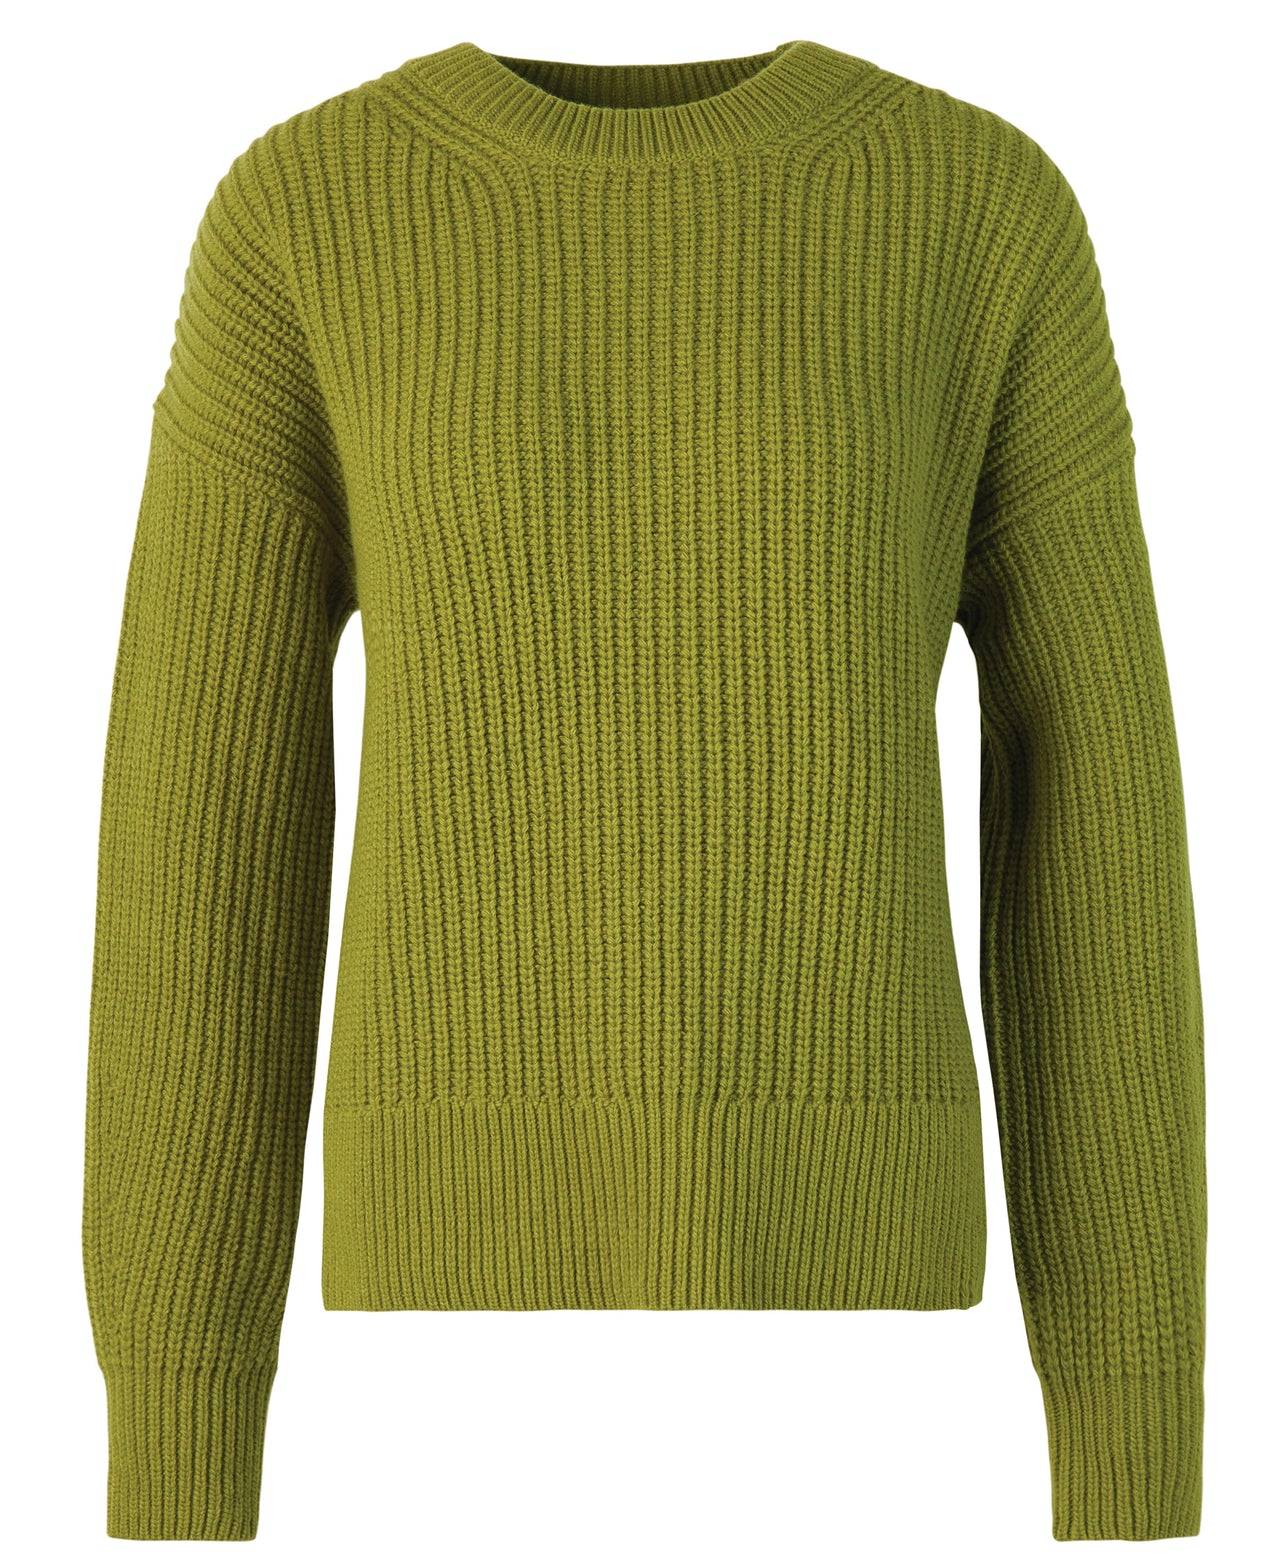 Barbour Horizon Green Knit